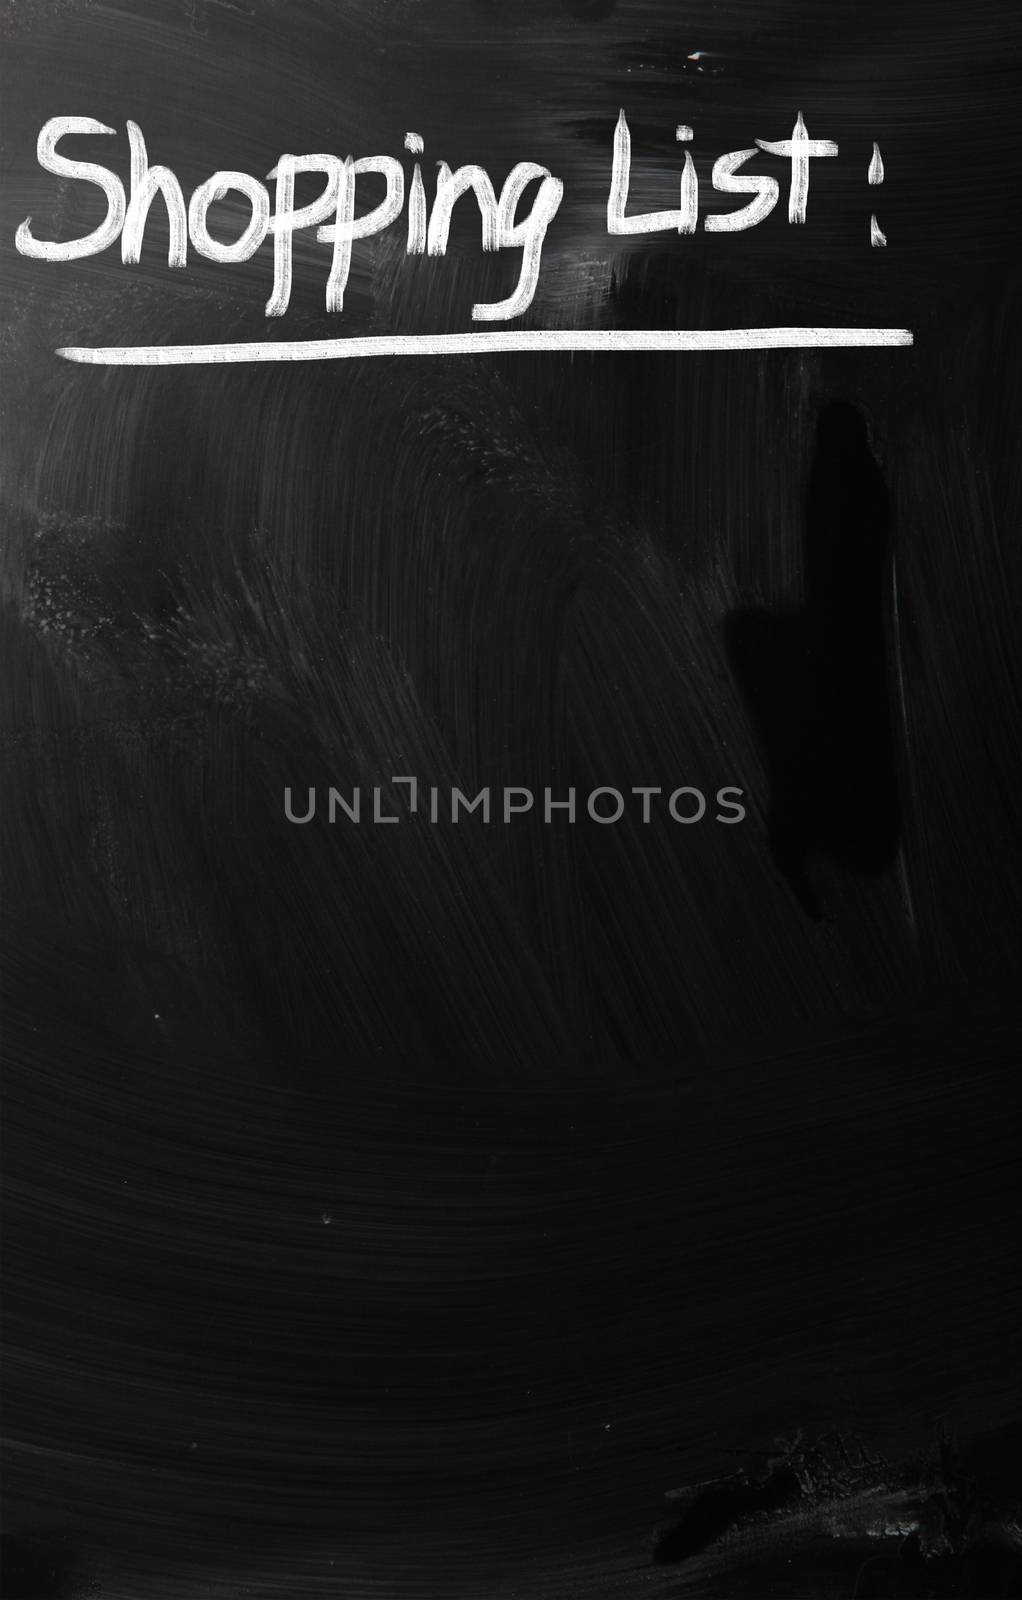 marketing concept handwritten with chalk on a blackboard